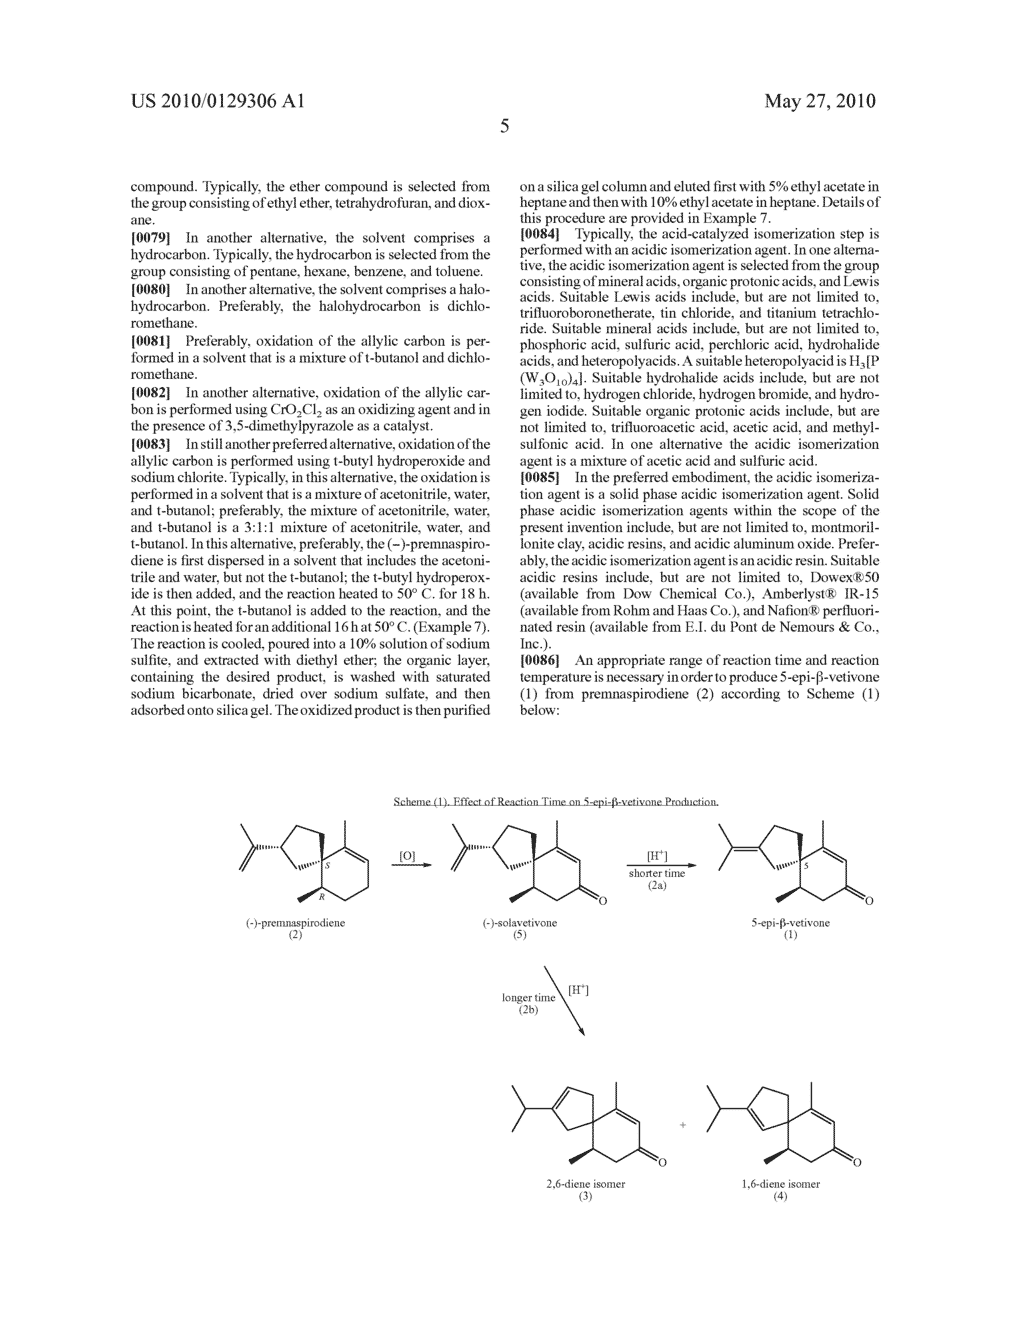 NOVEL FRAGRANCE AND METHODS FOR PRODUCTION OF 5-EPI-BETA-VETIVONE, 2-ISOPROPYL-6,10-DIMETHYL-SPIRO[4.5]DECA-2,6-DIEN-8-ONE, AND 2-ISOPROPYL-6,10-DIMETHYL-SPIRO[4.5]DECA-1,6-DIEN-8-ONE - diagram, schematic, and image 12